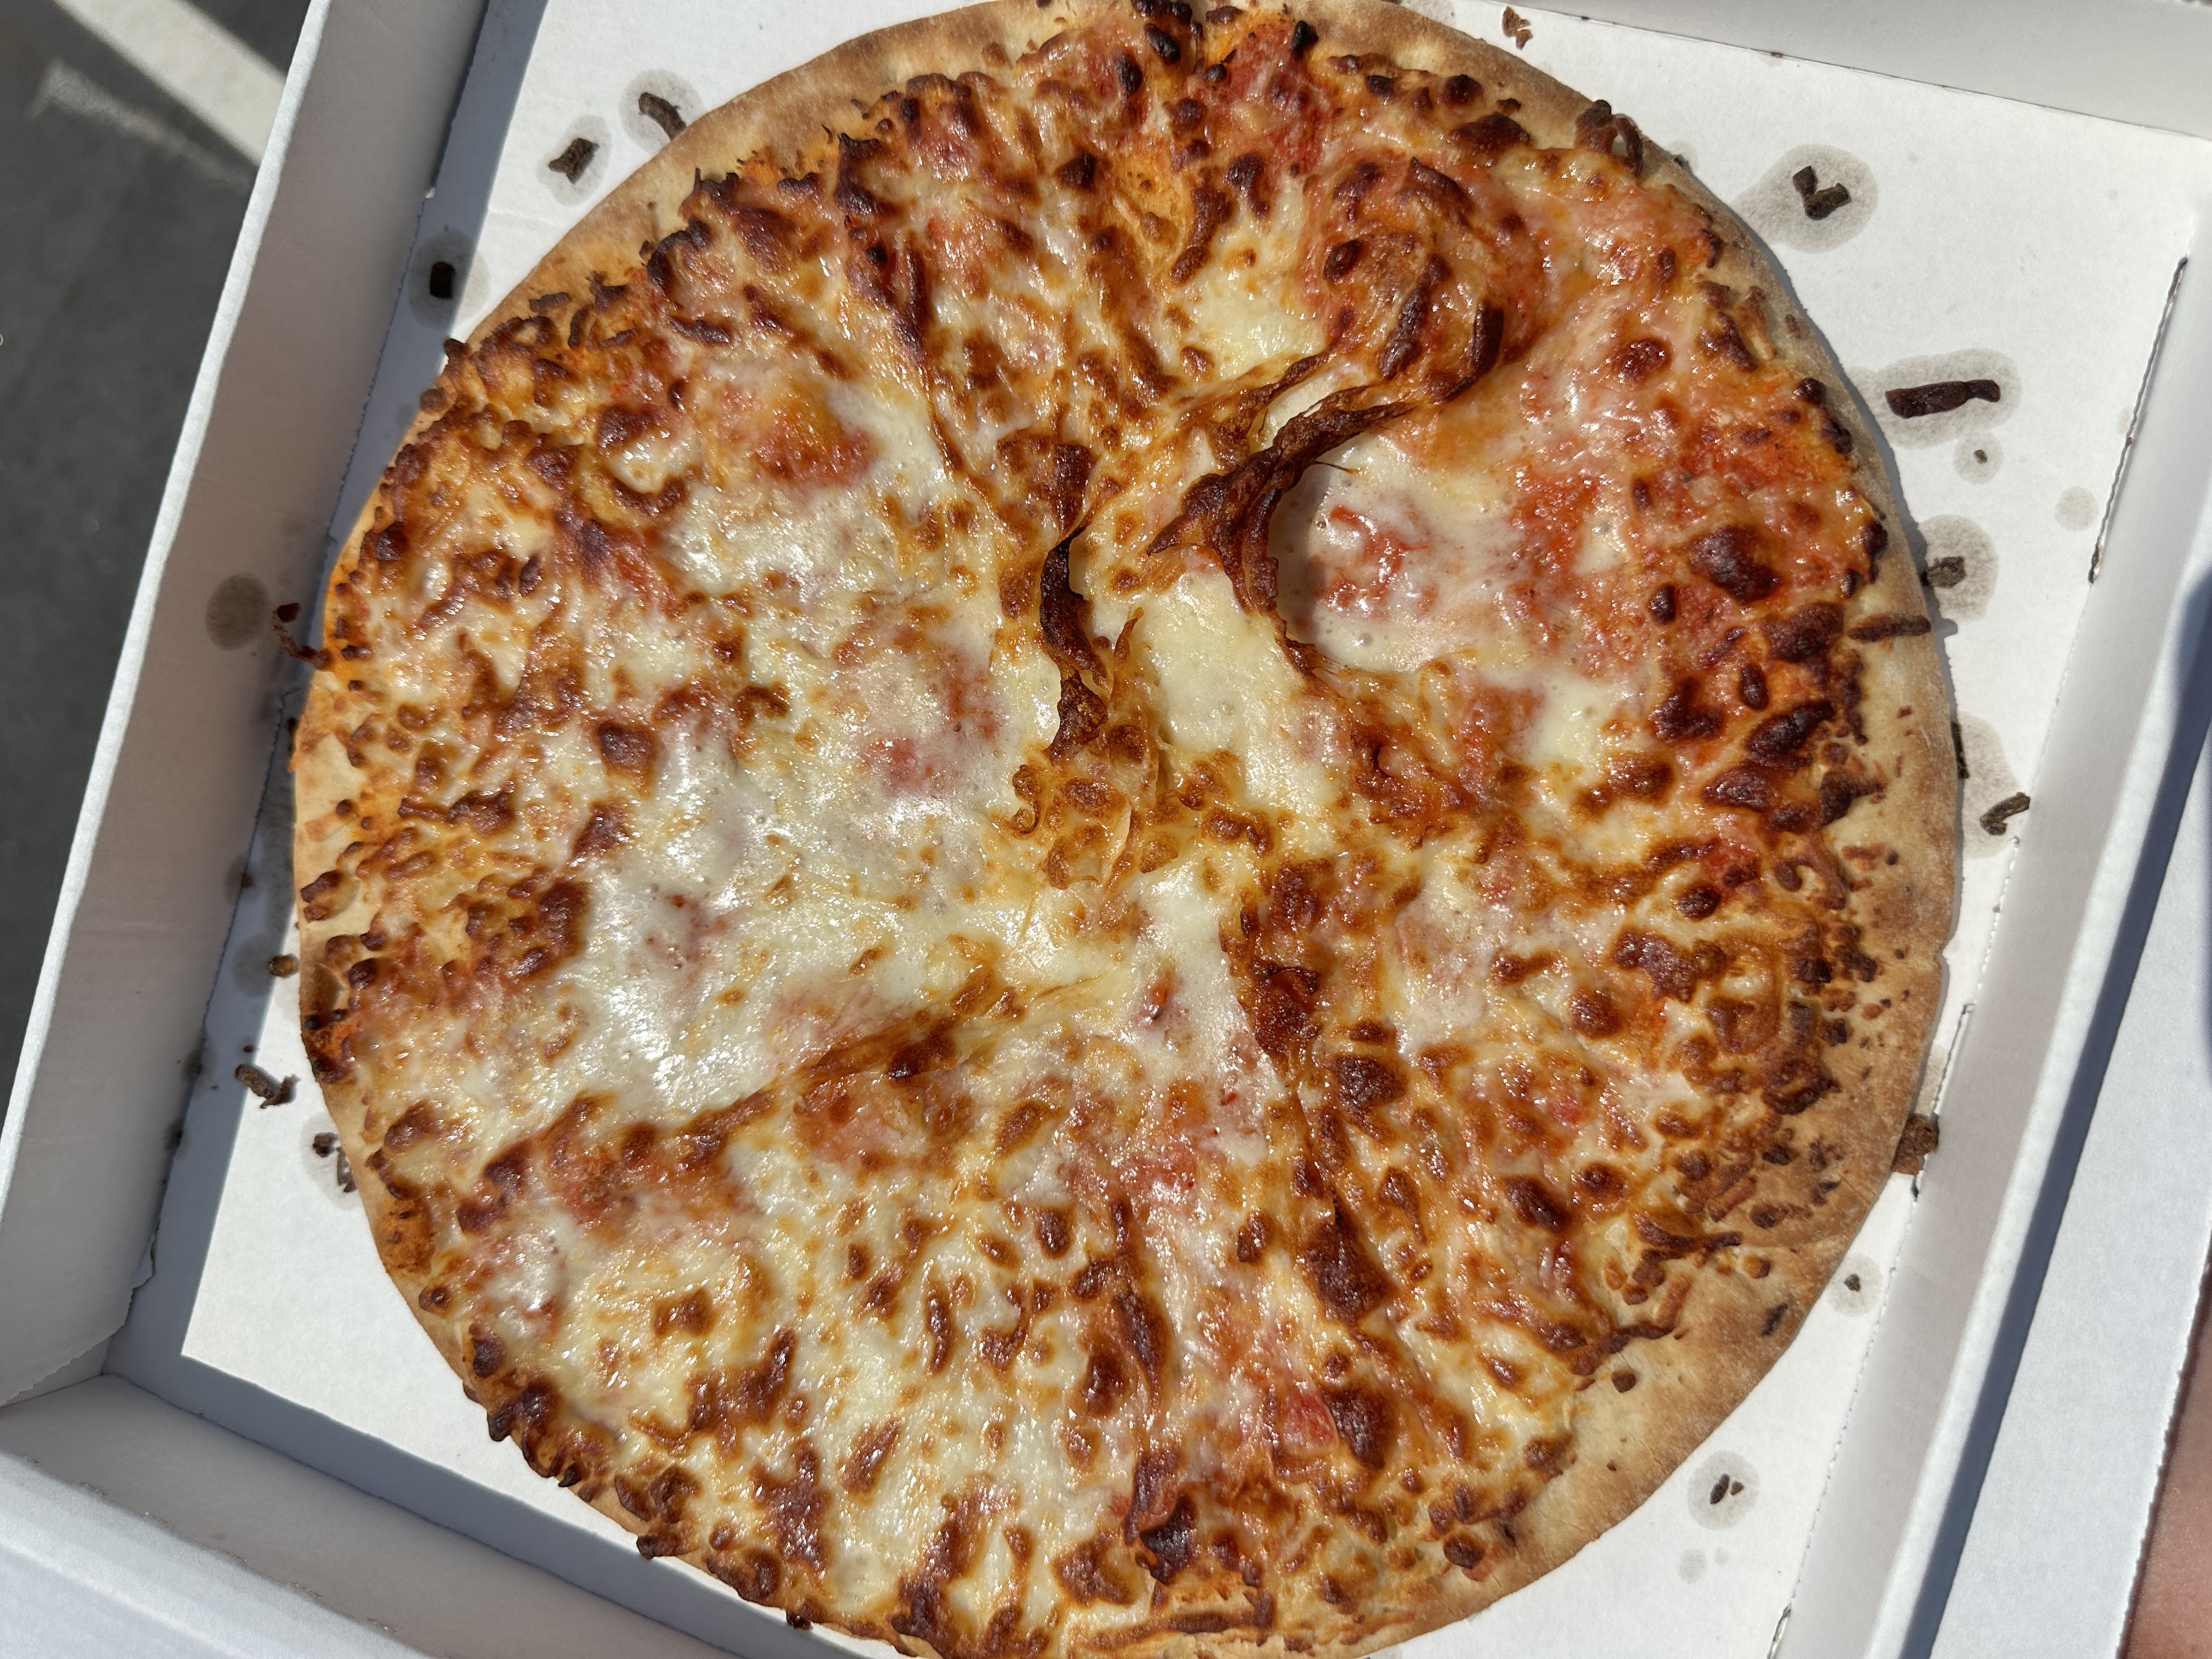 Four cheese pizza from the automated PizzaForno machine in Buckhead Atlanta.